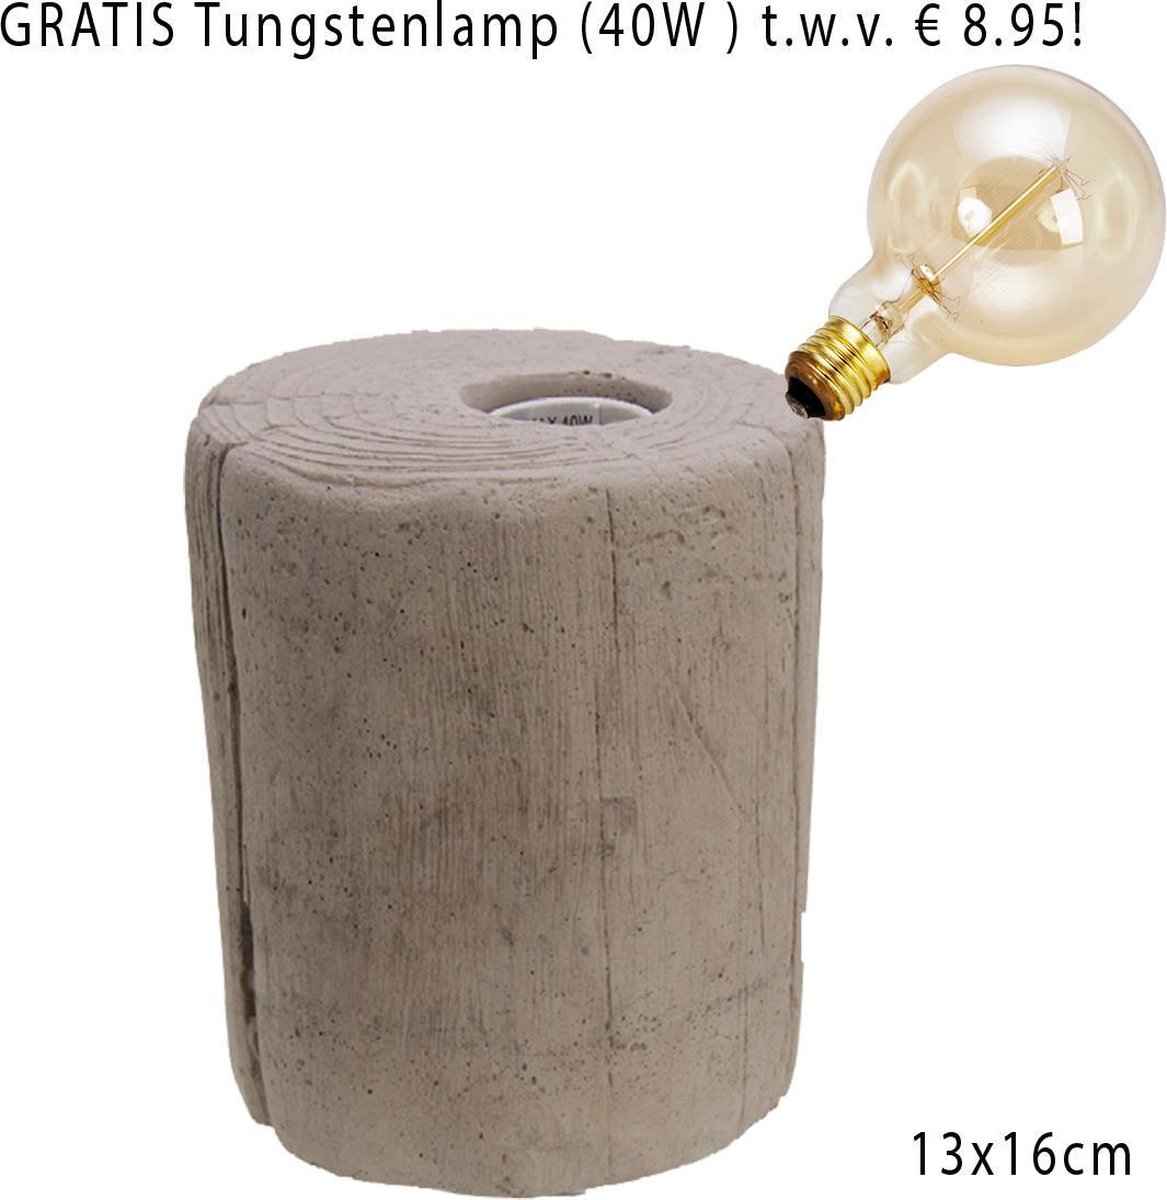 Betonnen Tafellamp inclusief 40W Ronde Tungsten filament lamp, Tafellamp - beton - grijs - industrieel - bedlamp - slaapkamer lamp - Moederdag kado